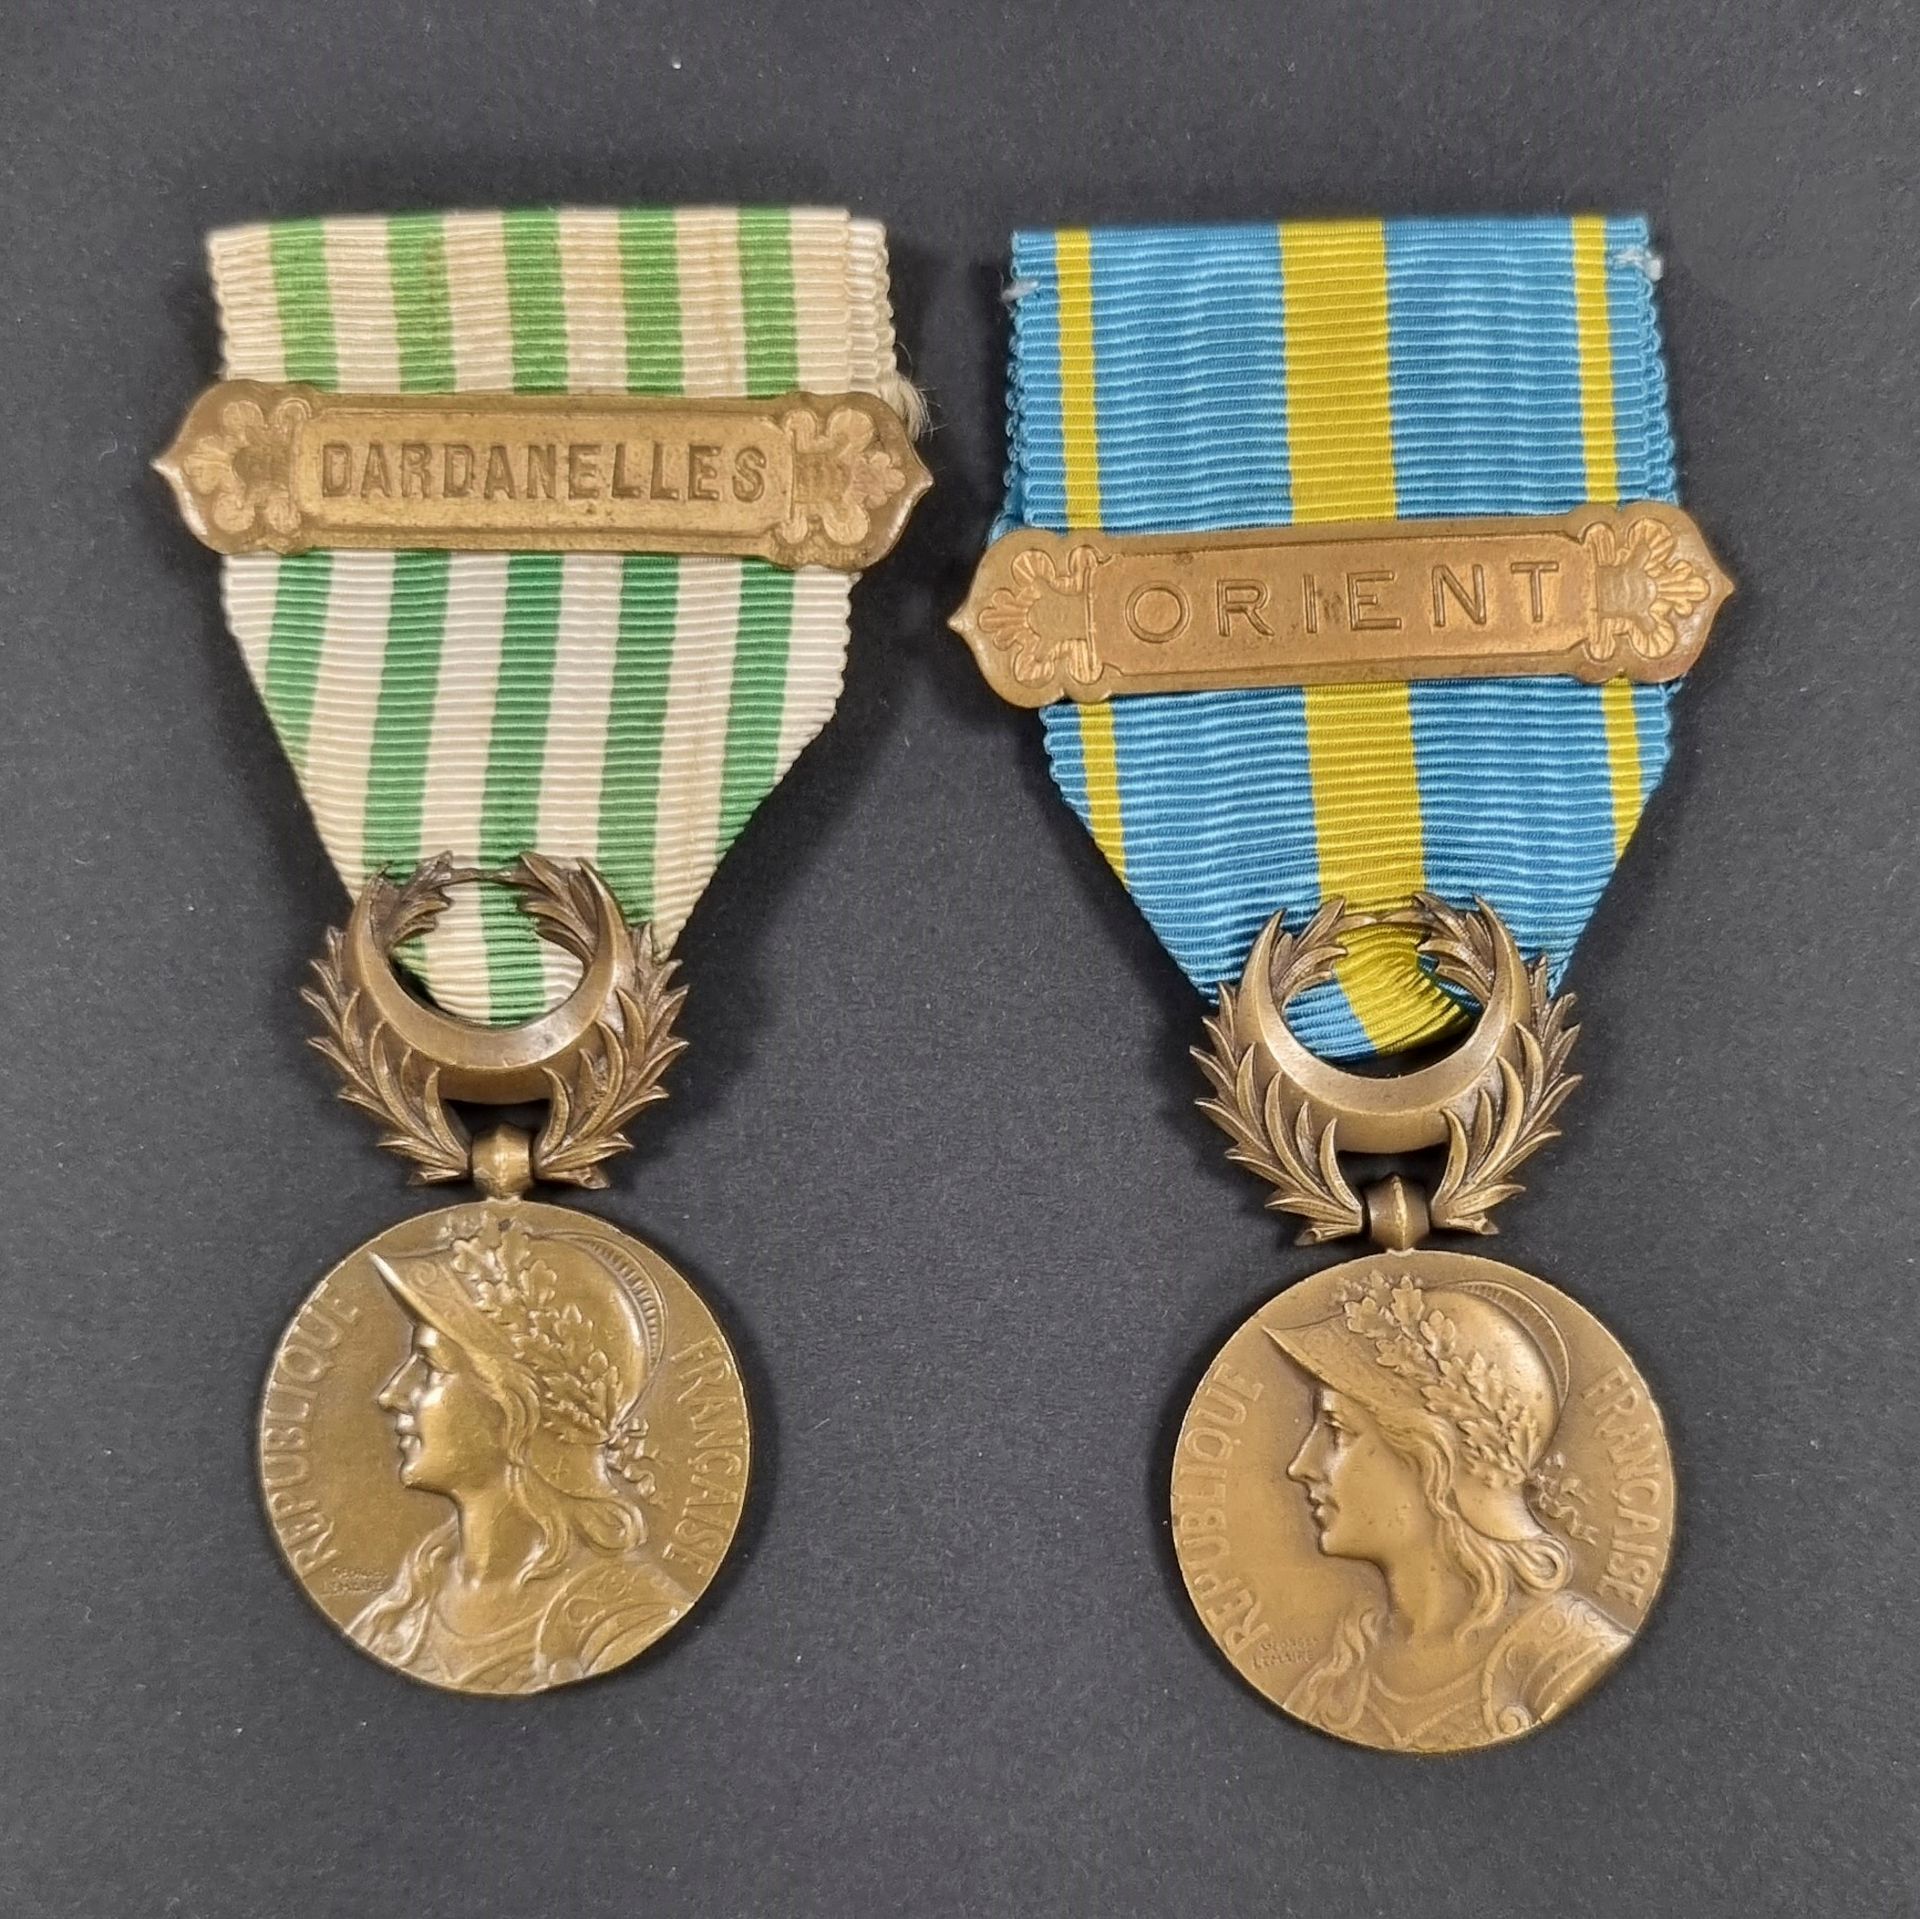 Null 法国 
两枚奖章： 
- 达达尼尔海峡奖章。青铜质地。绶带上有金扣 "DARDANELLES"。背面有铸币厂的印记。 
49 x 27 mm
- 东方&hellip;